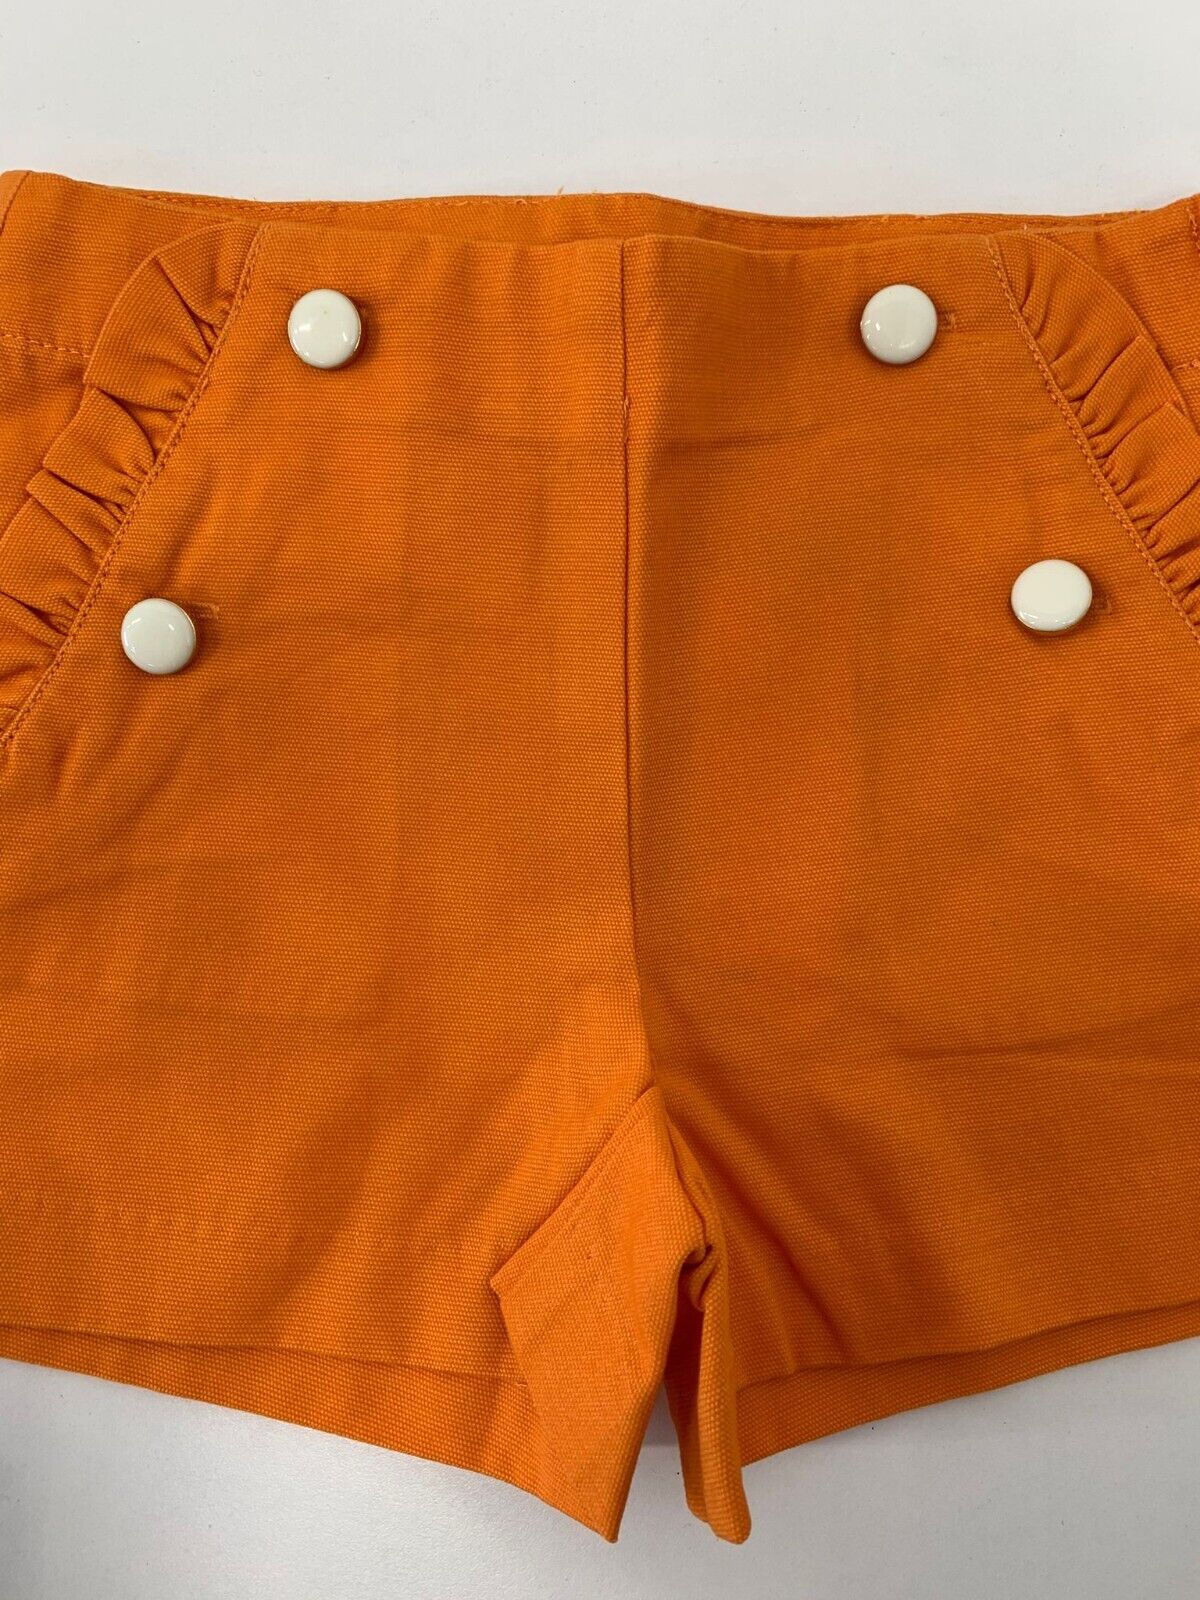 Janie & Jack Girls 3 Ruffle Trim Shorts Sun Orange High Waist